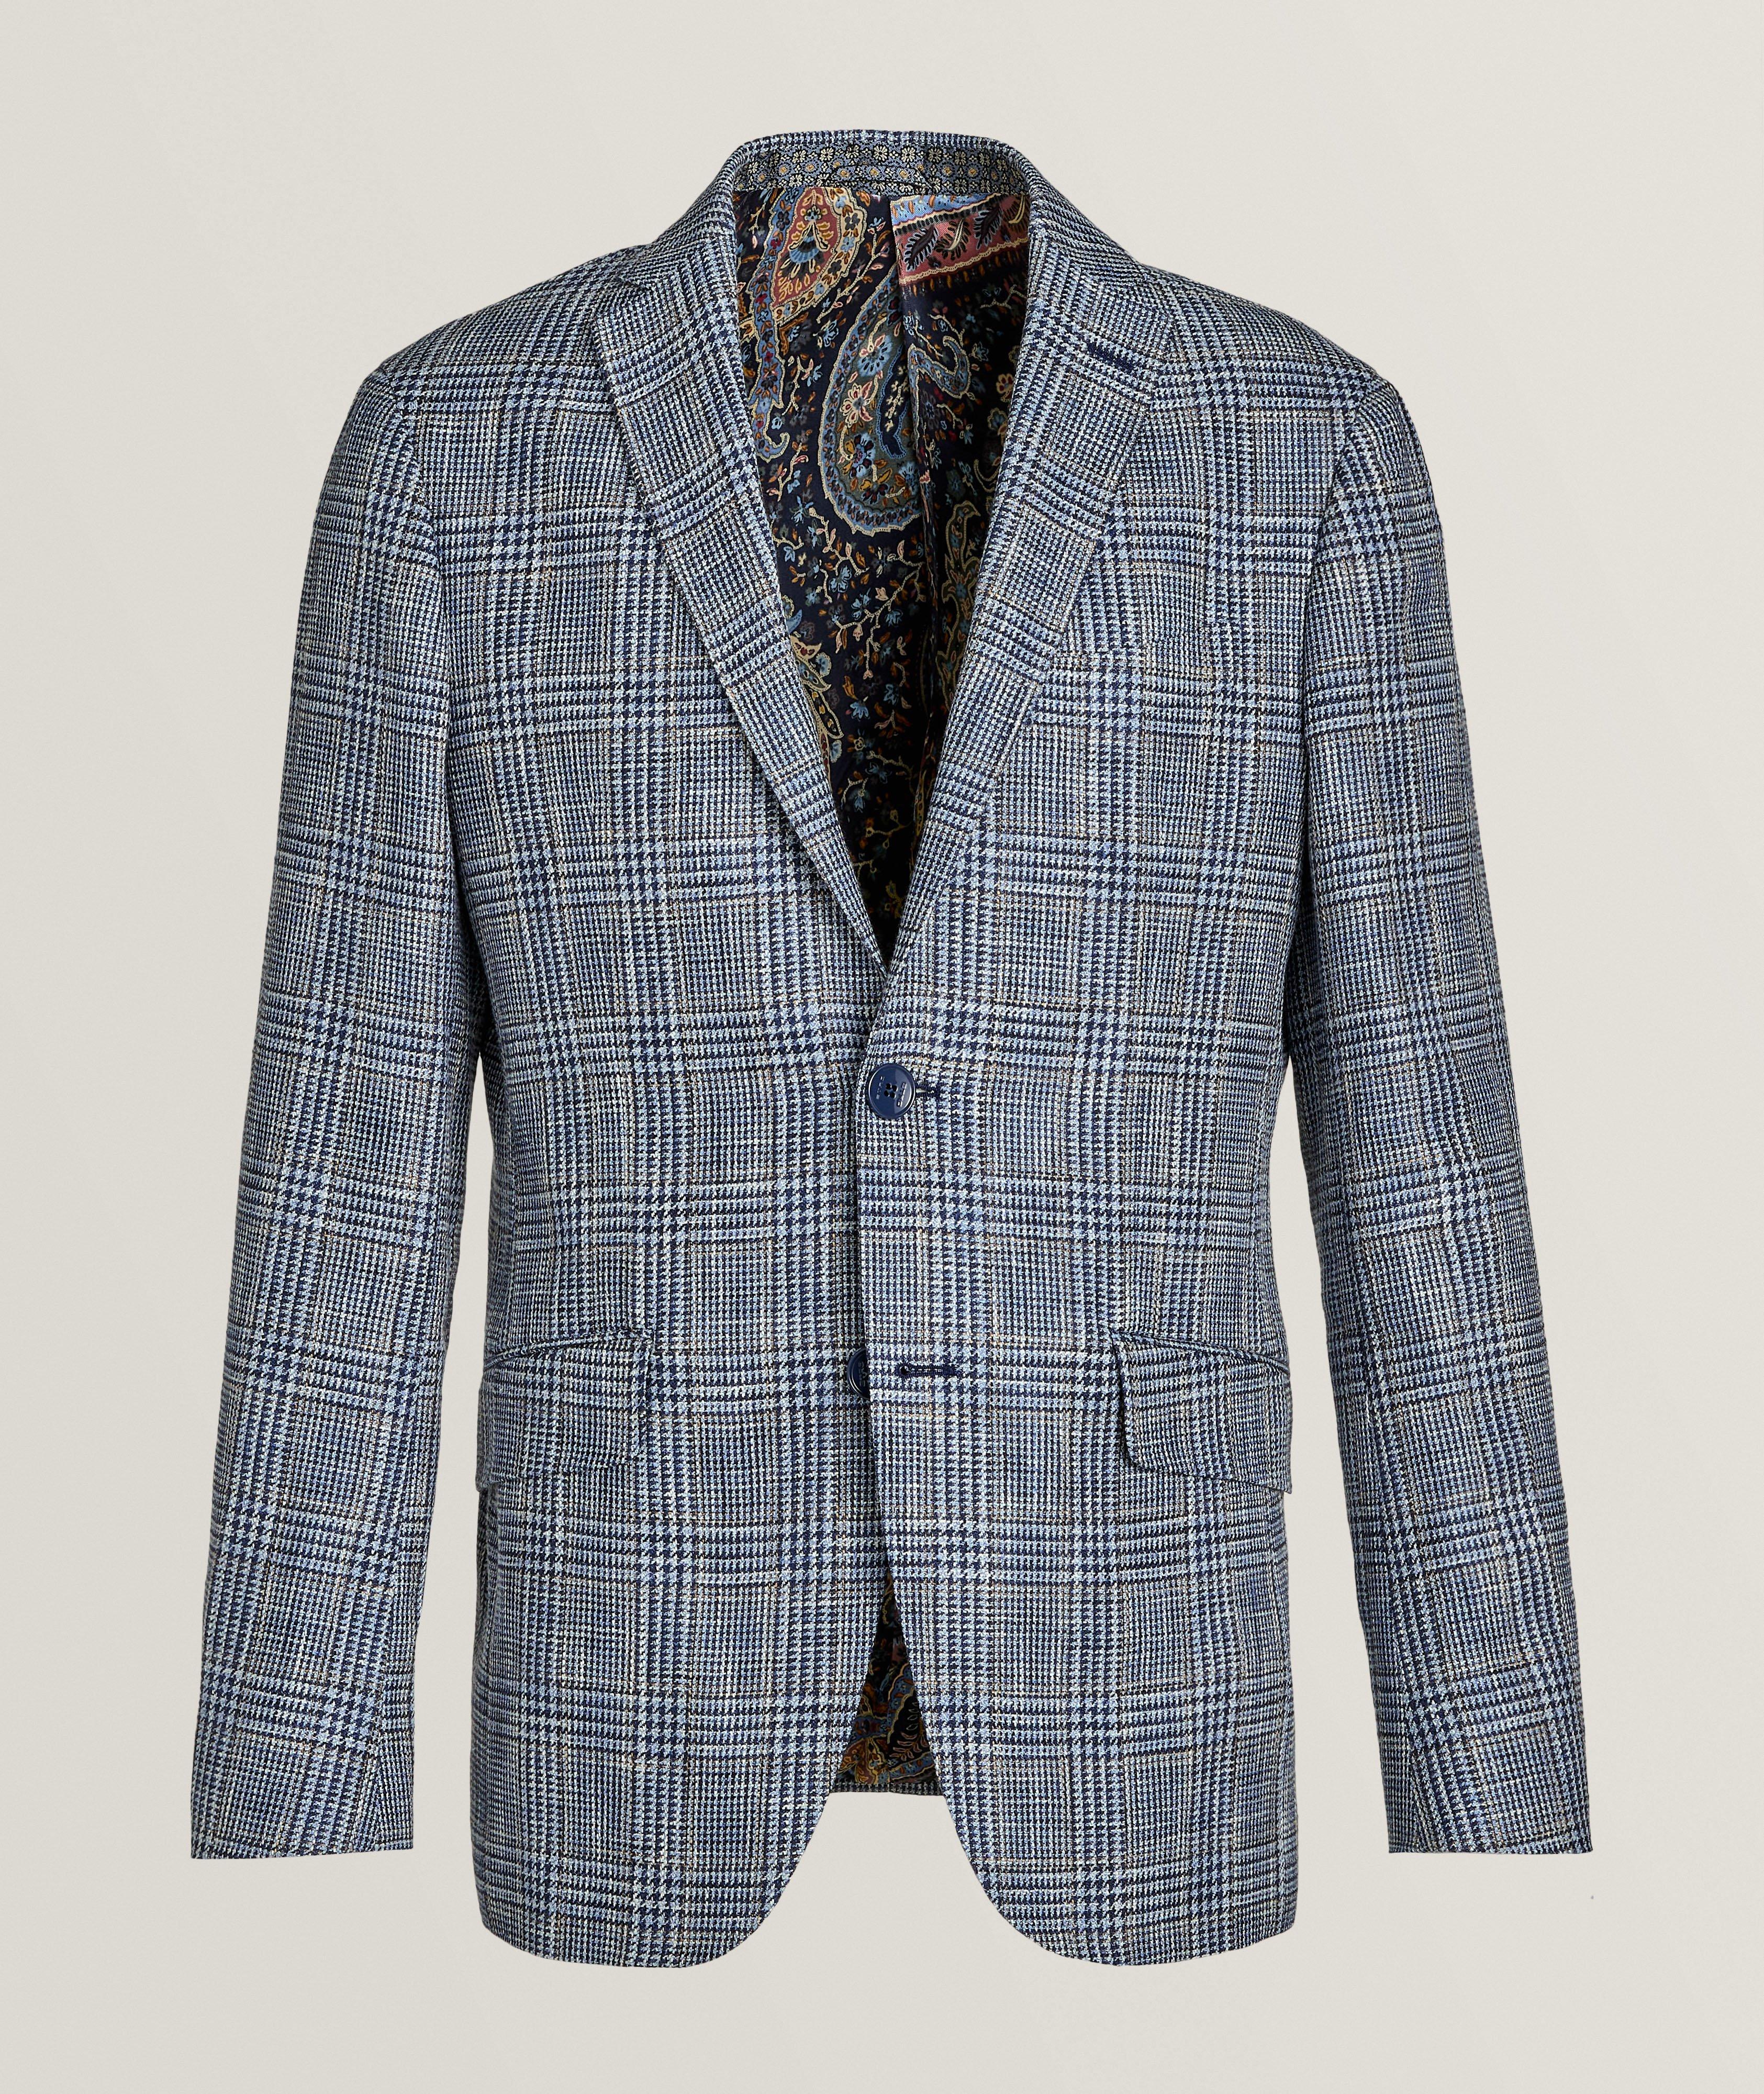 Checkered Cotton, Linen & Wool Sport Jacket  image 0